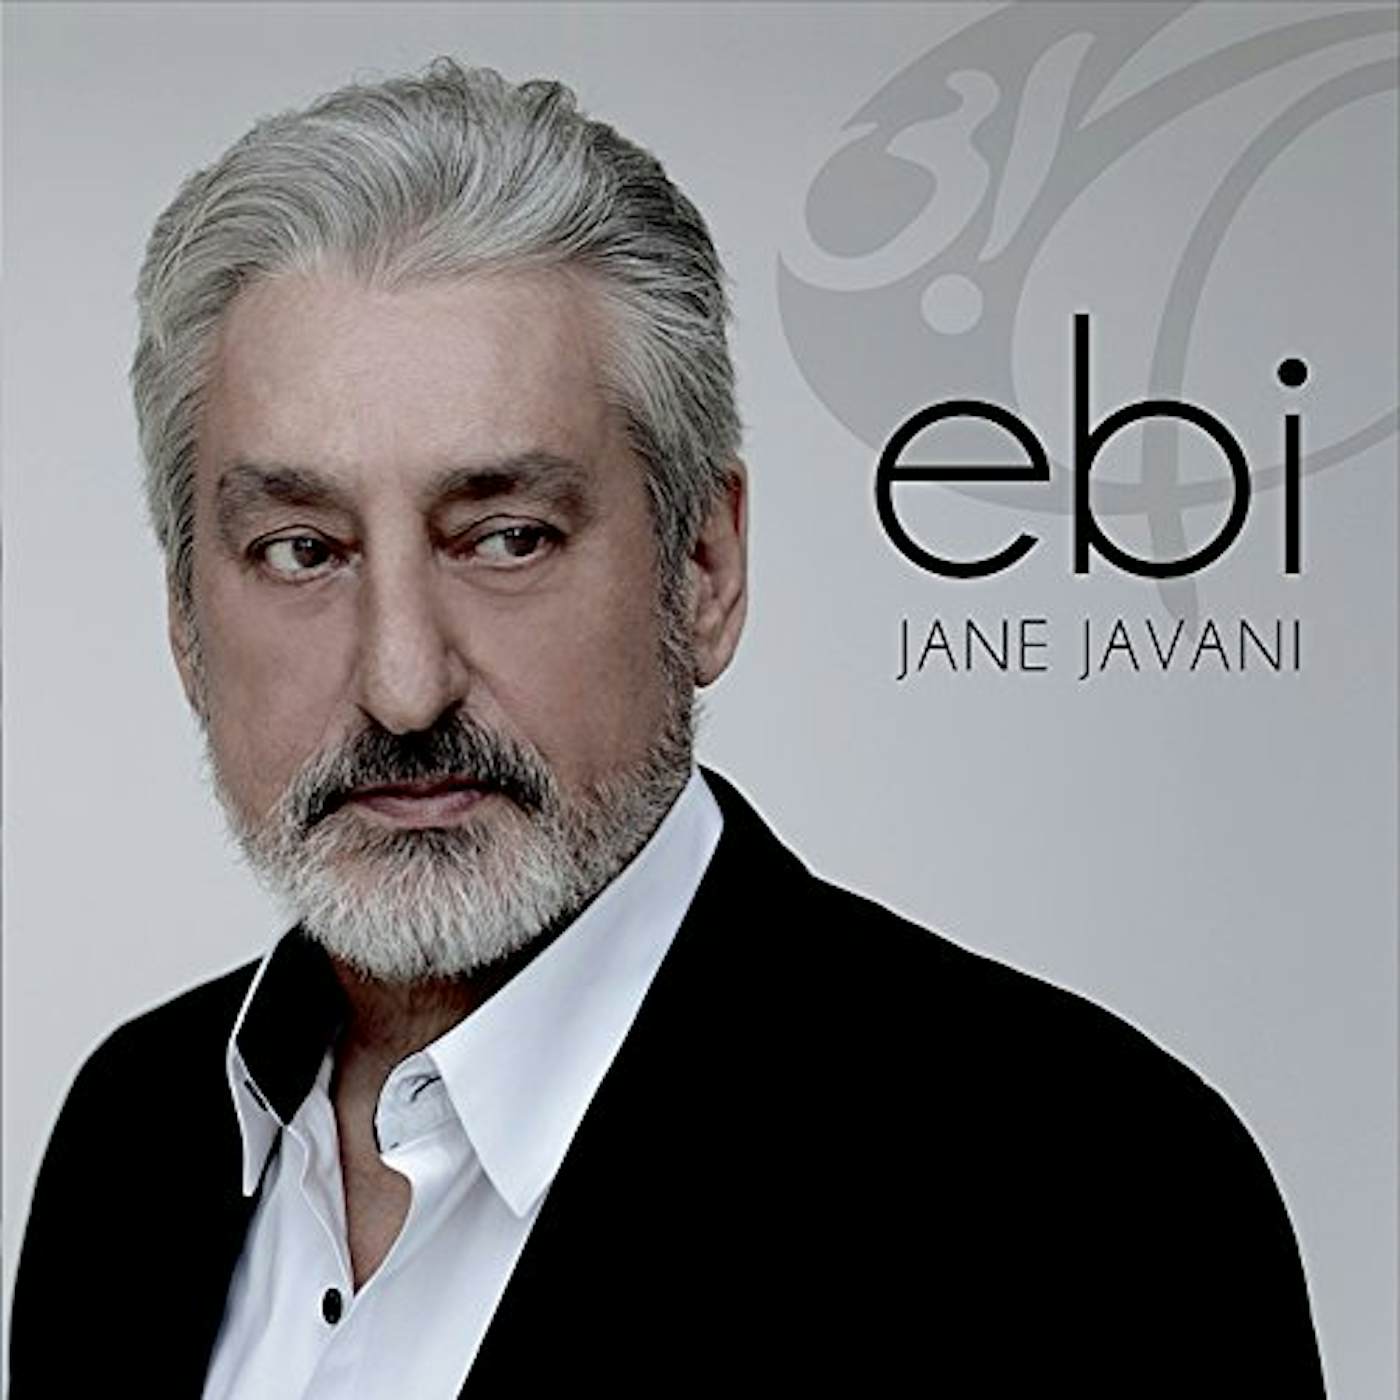 Ebi JANE JAVANI CD